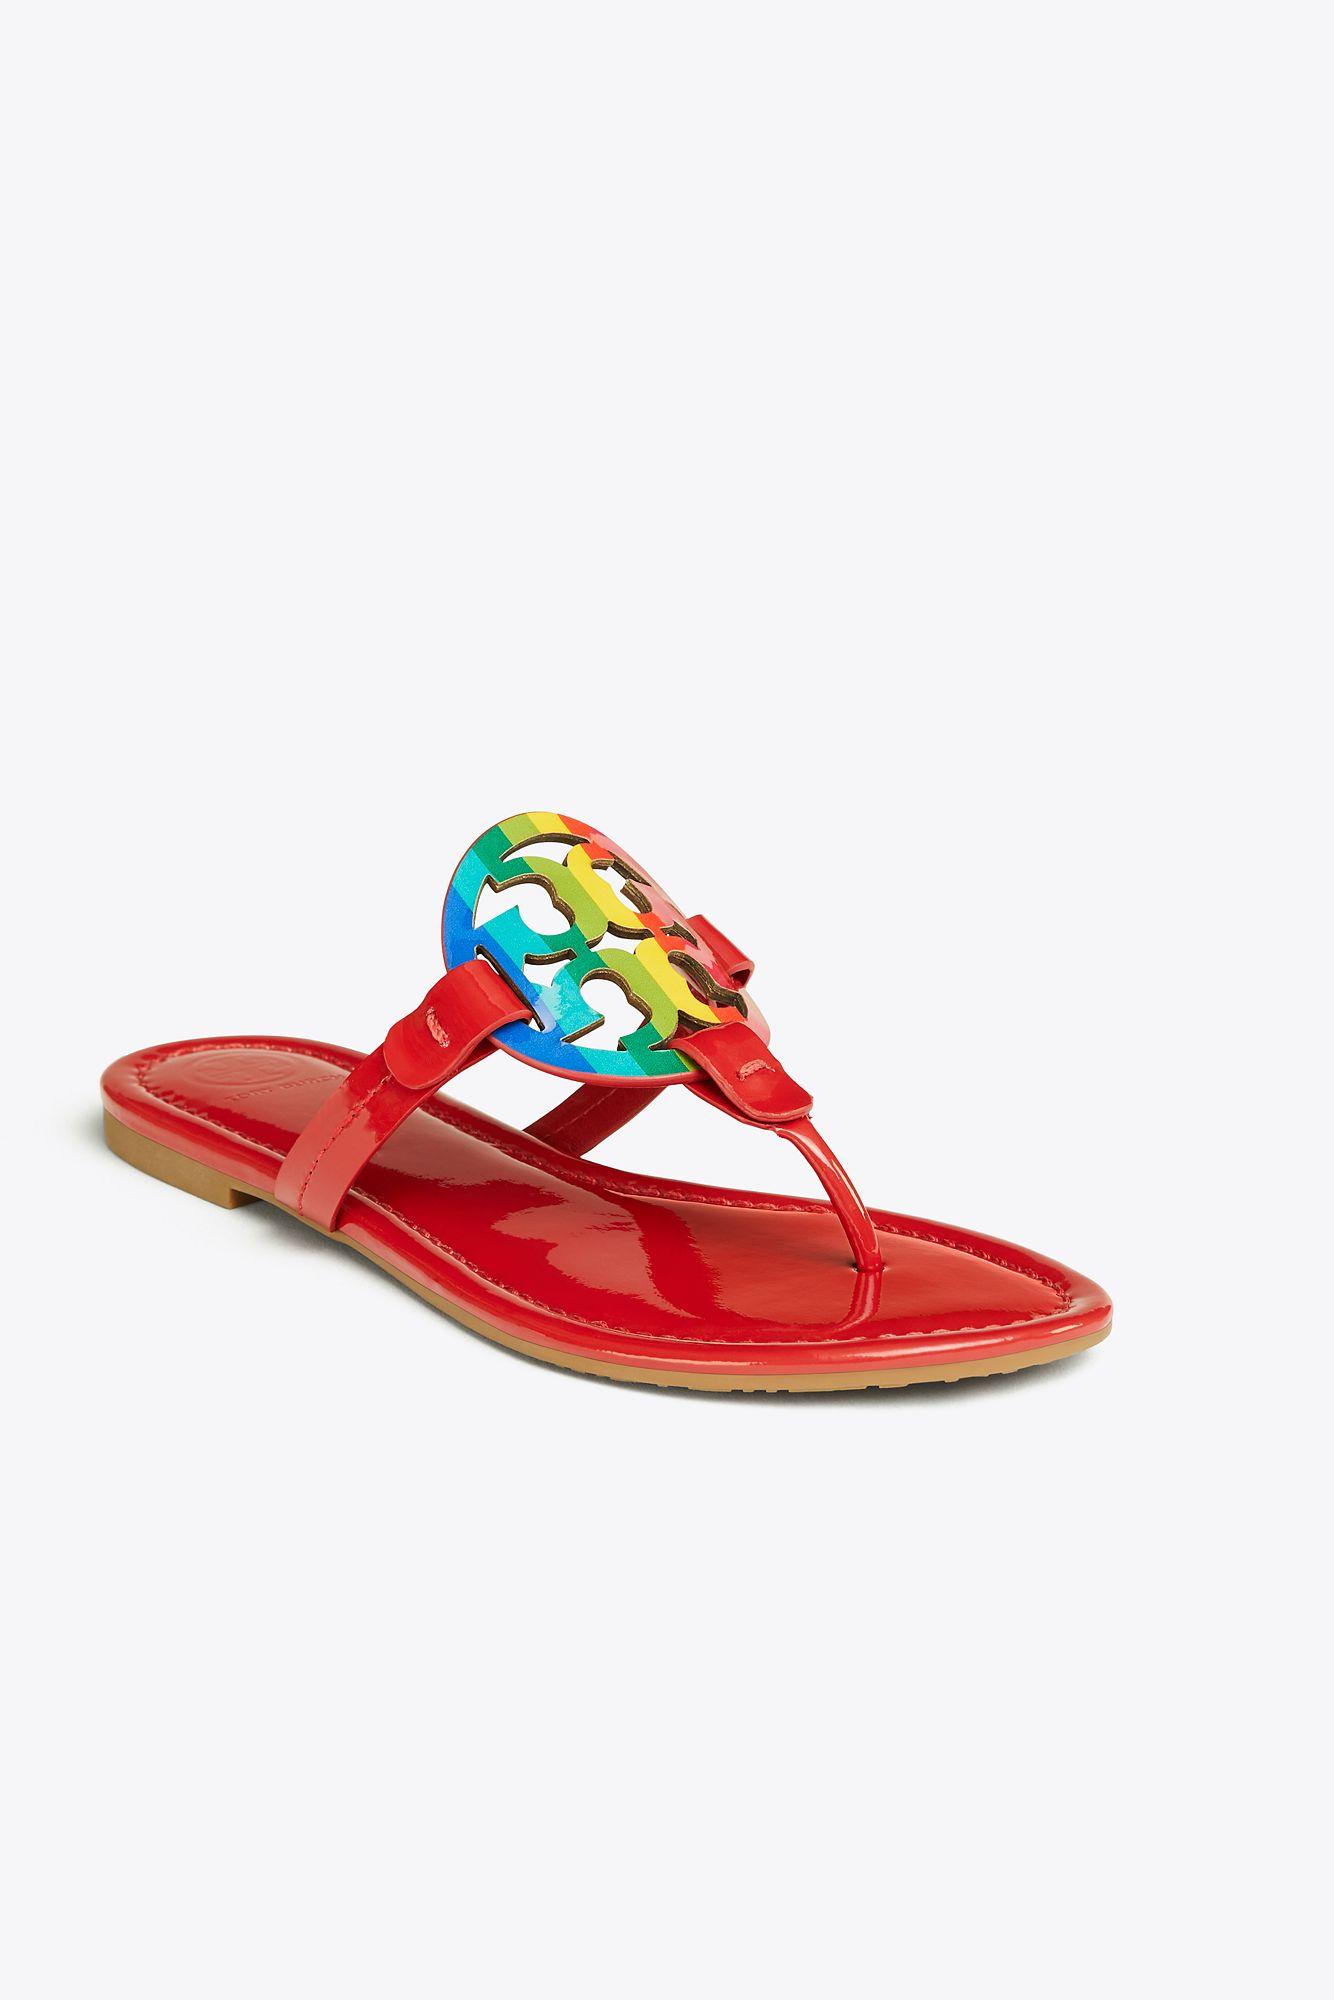 tory burch red rainbow miller sandals